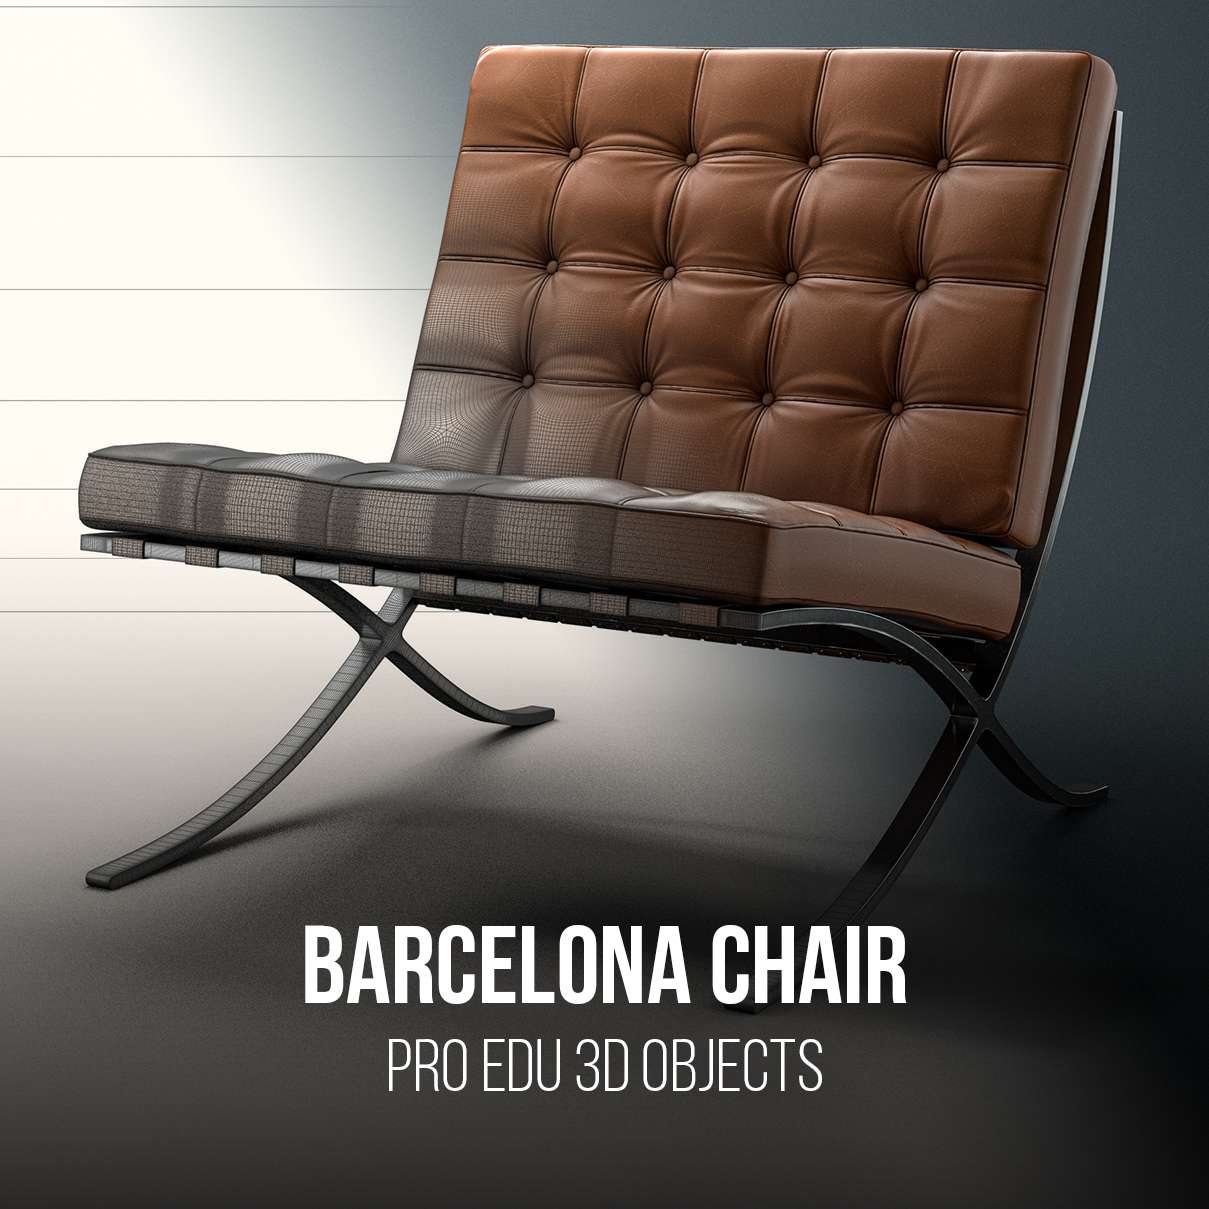 Barcelona Modern Chair 3D Model | C4D FBX OBJ CGI Asset PRO EDU PRO EDU PRO EDU